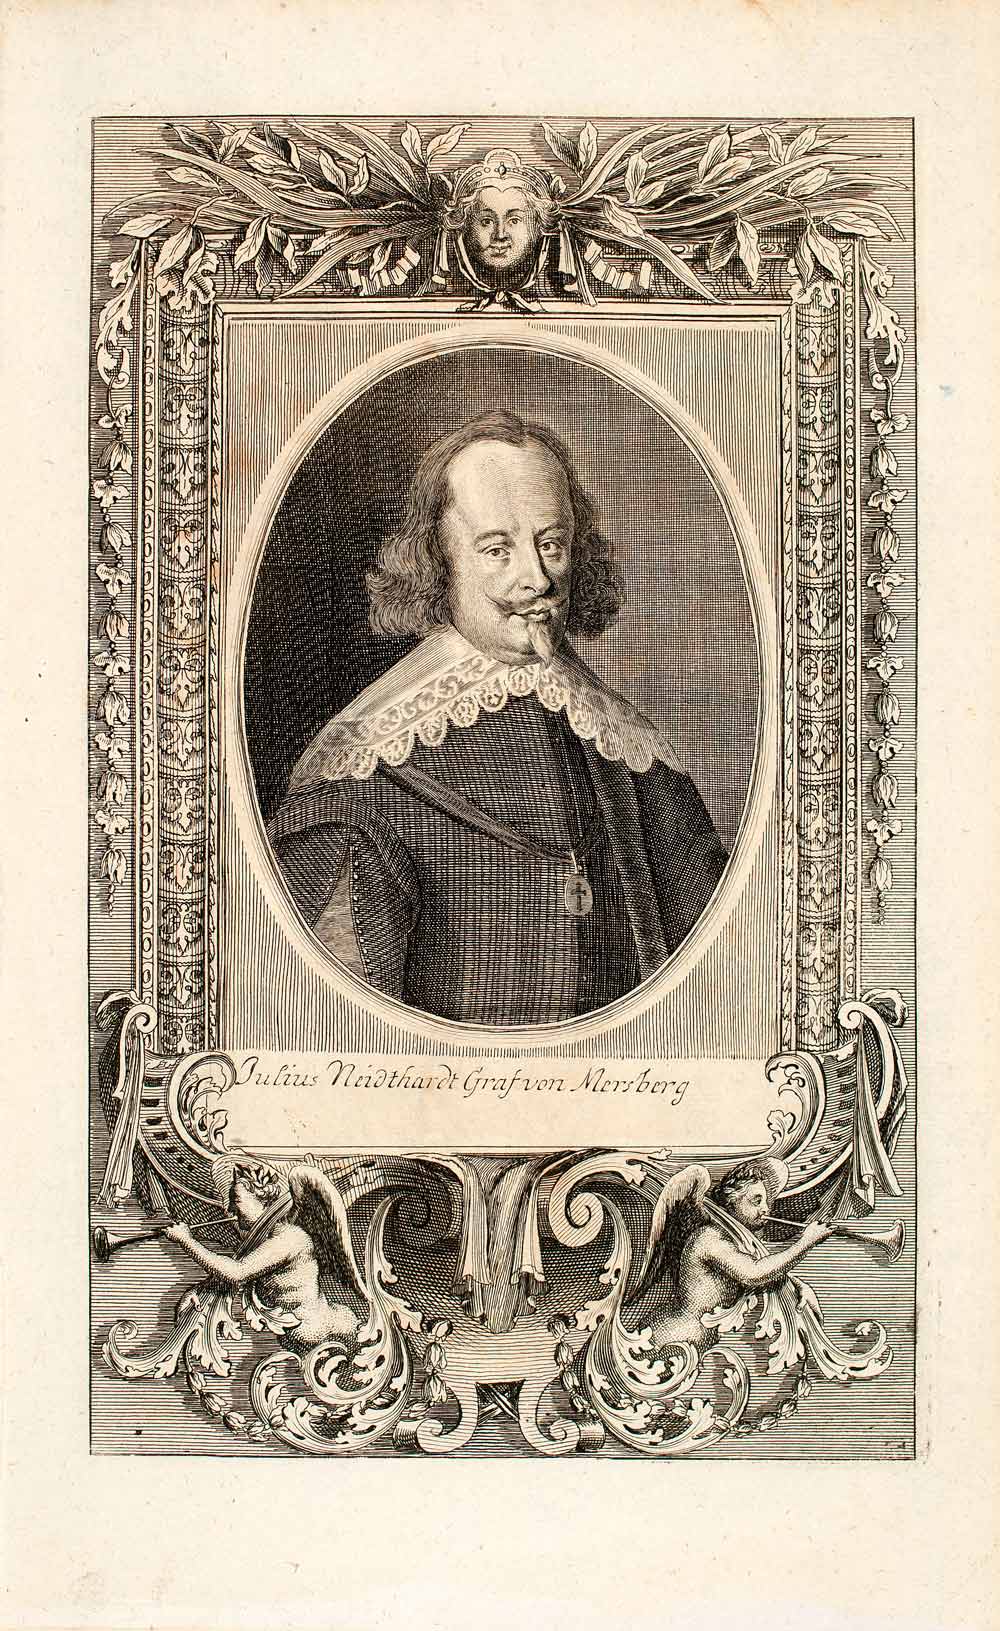 1722 Copper Engraving Count Julius Neidthardt Graf Von Mersberg Portrait EUM4